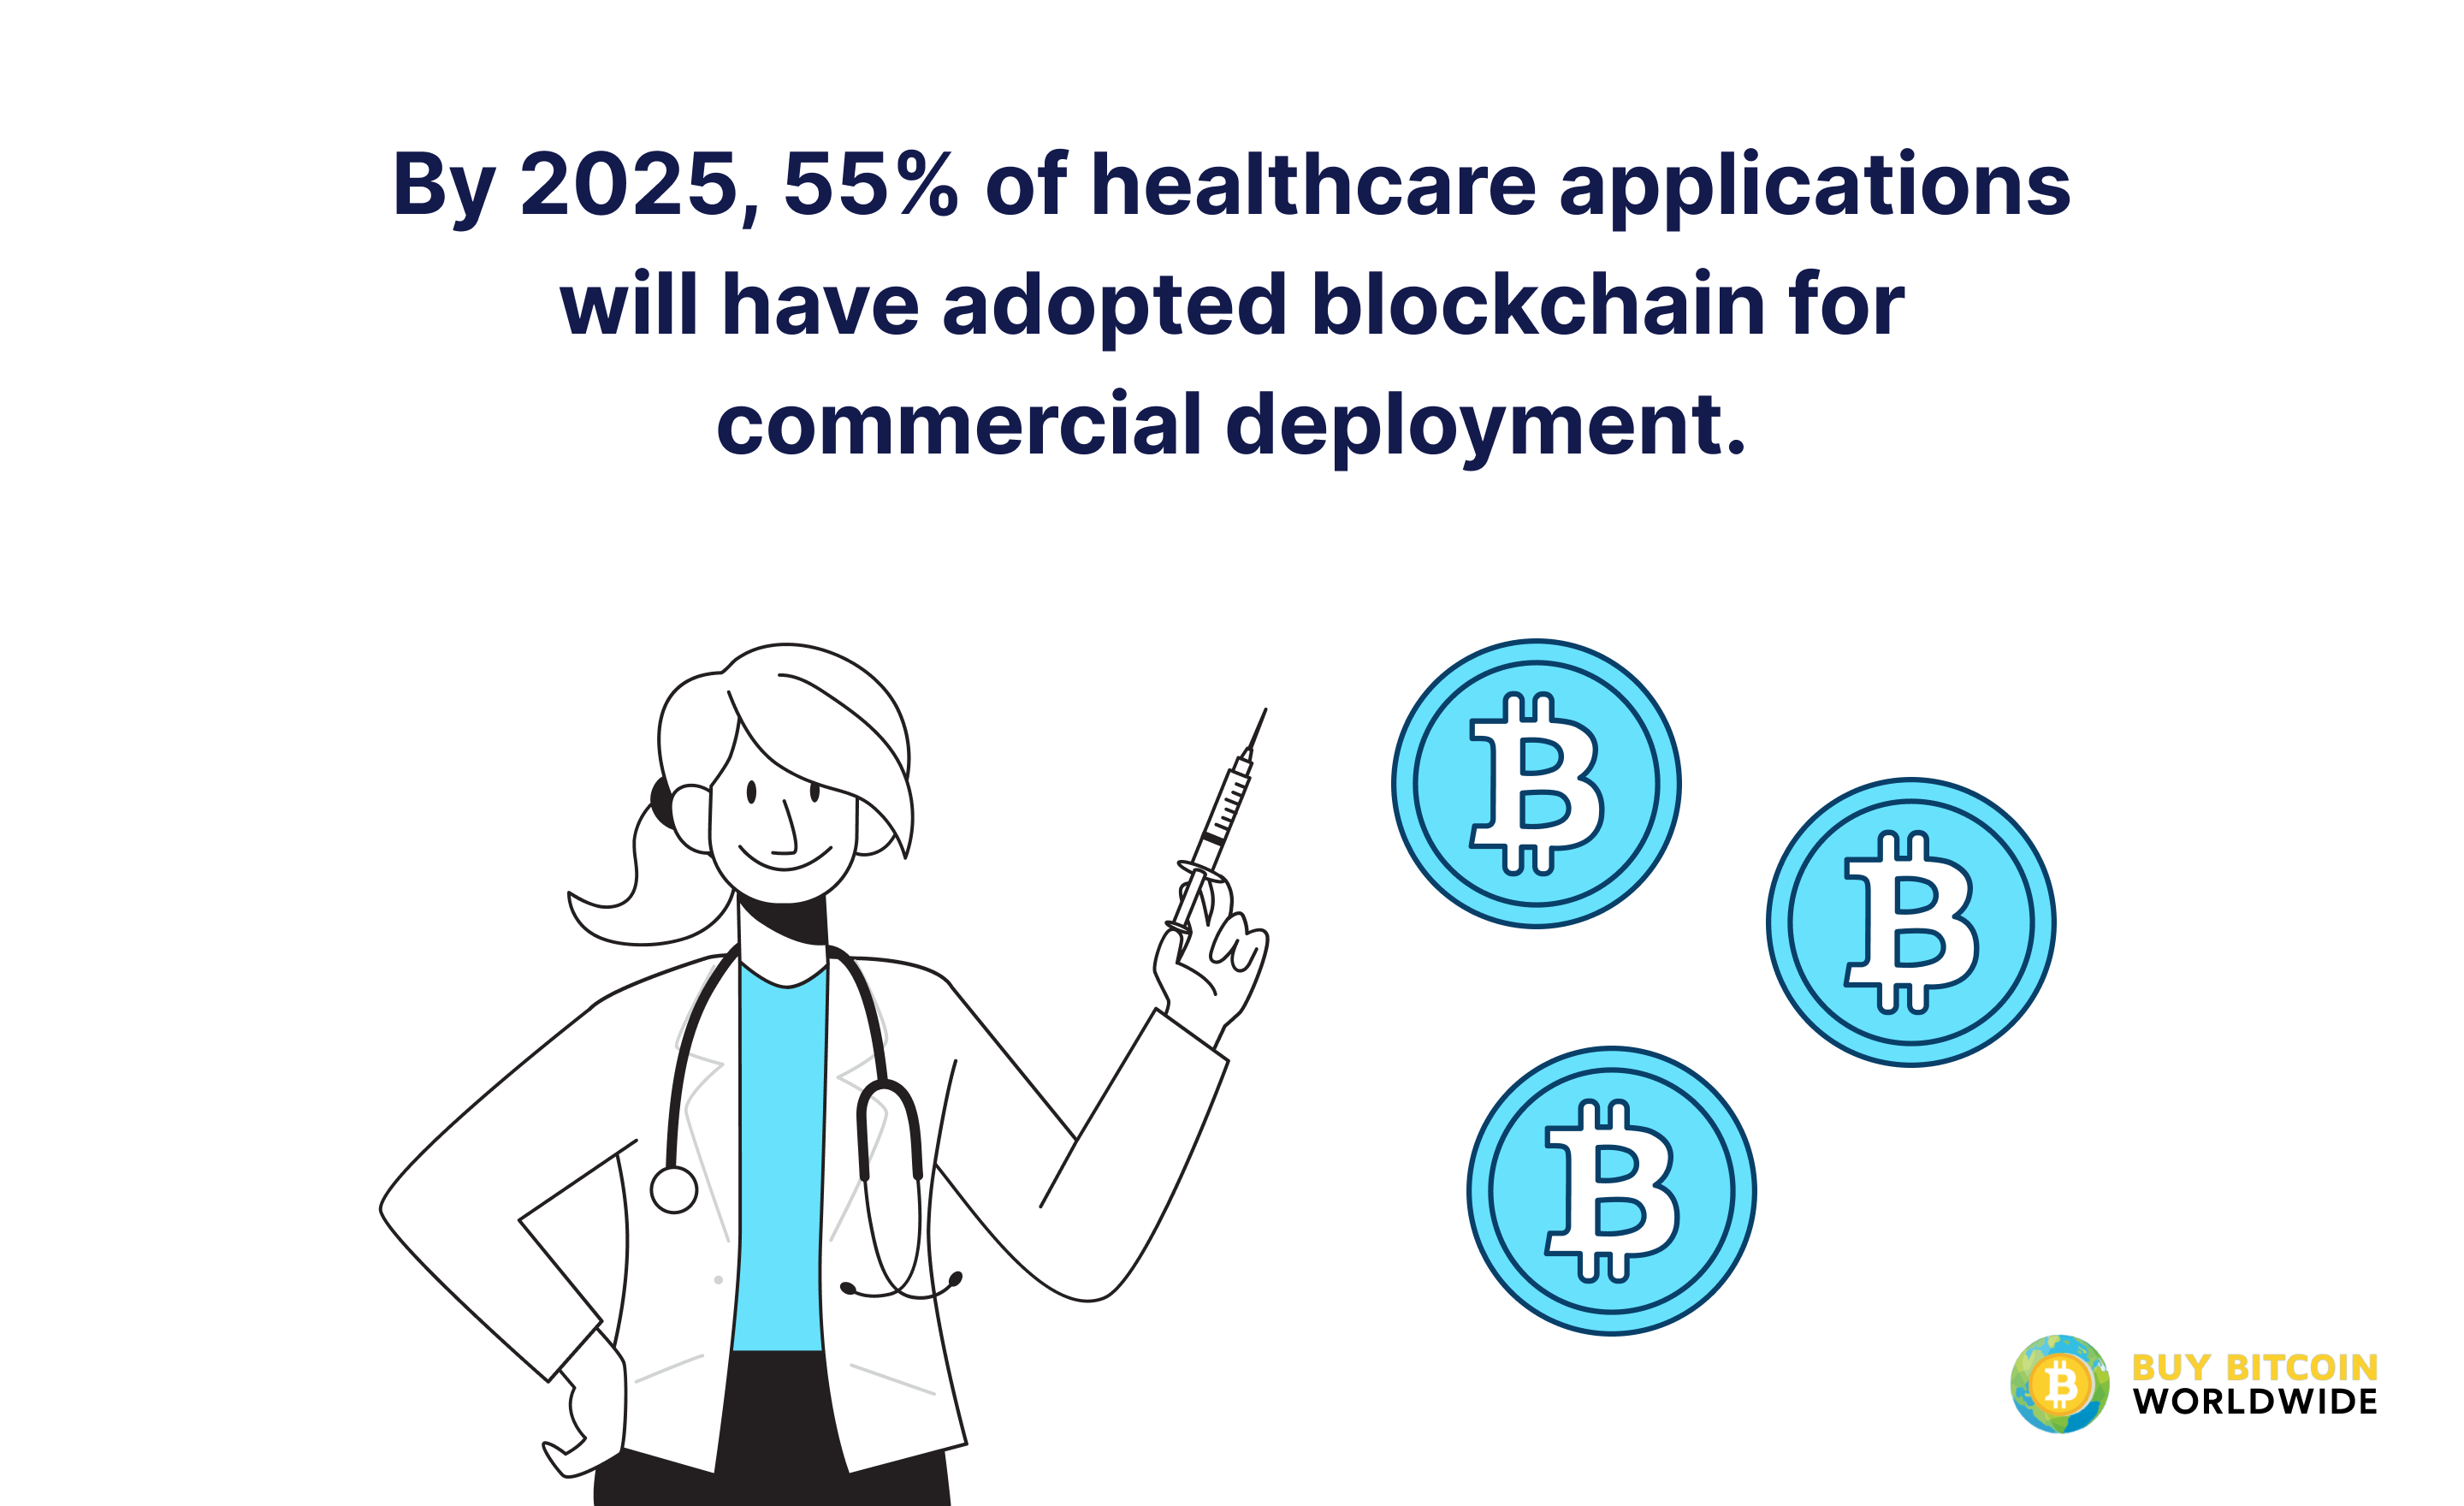 healthcare applications will adopt blockchain